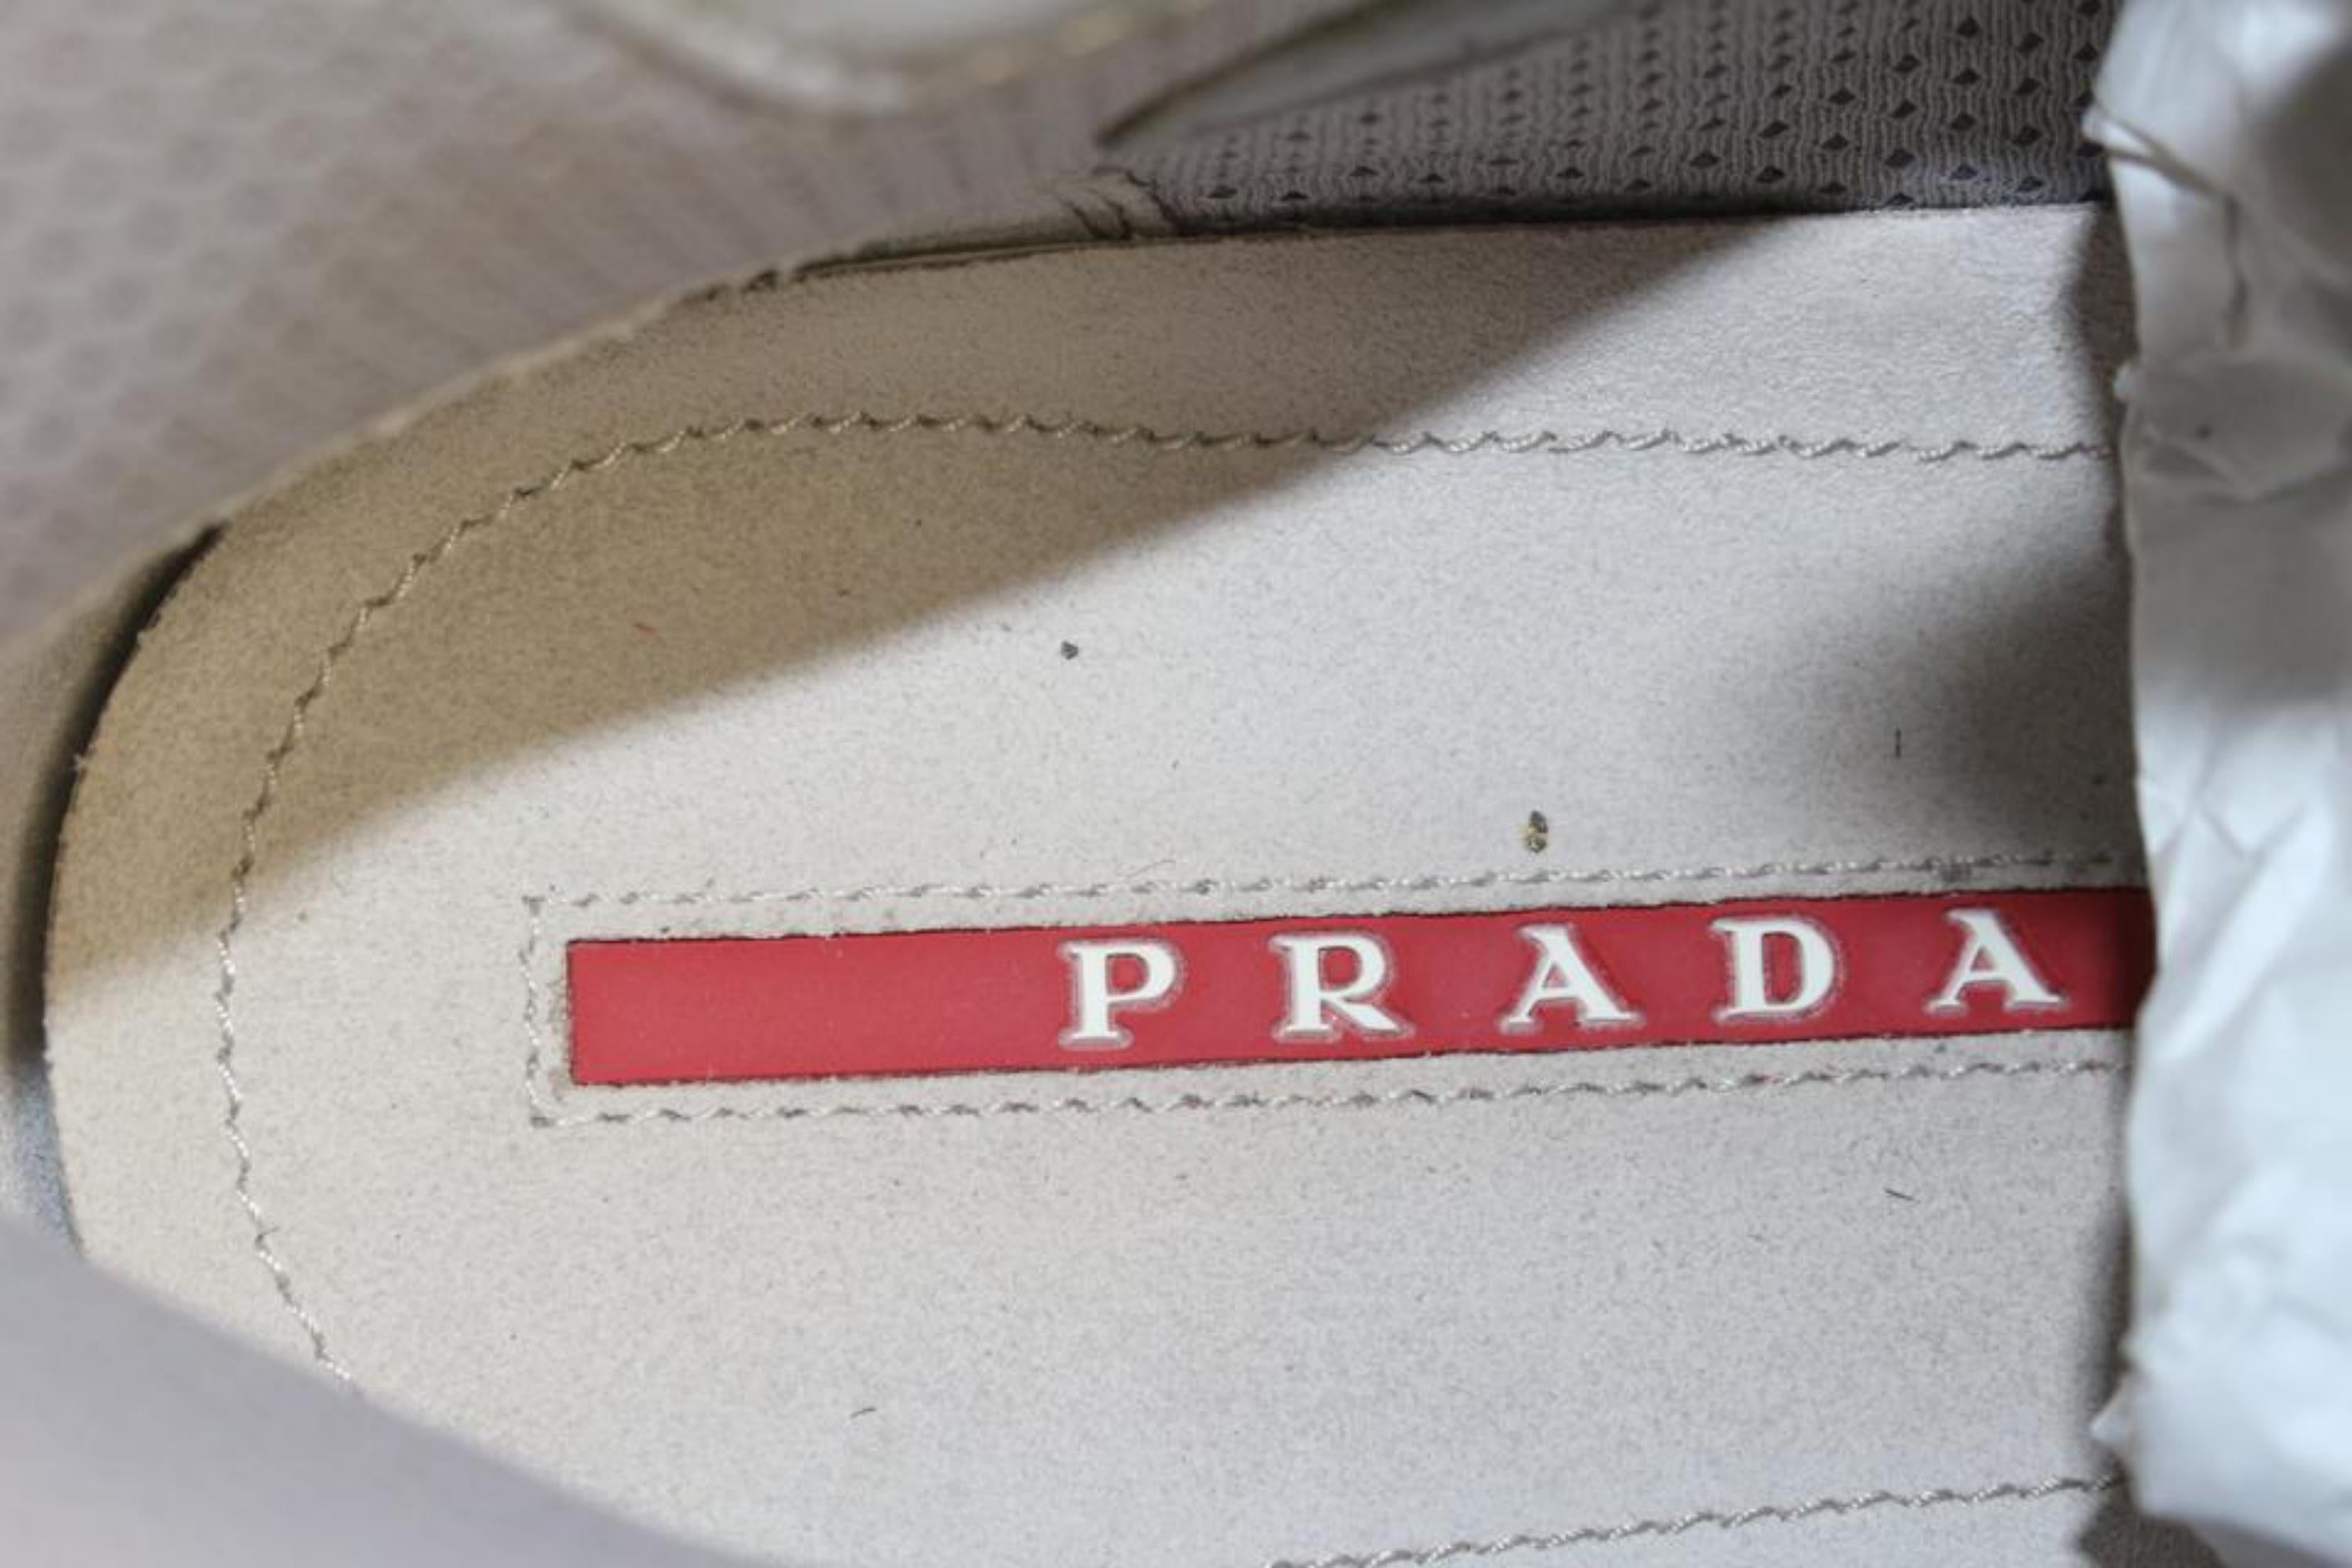 Prada Men 9 America's Cup Patent Leather Vernice Bike Sneaker 4T0341 1116p49 2